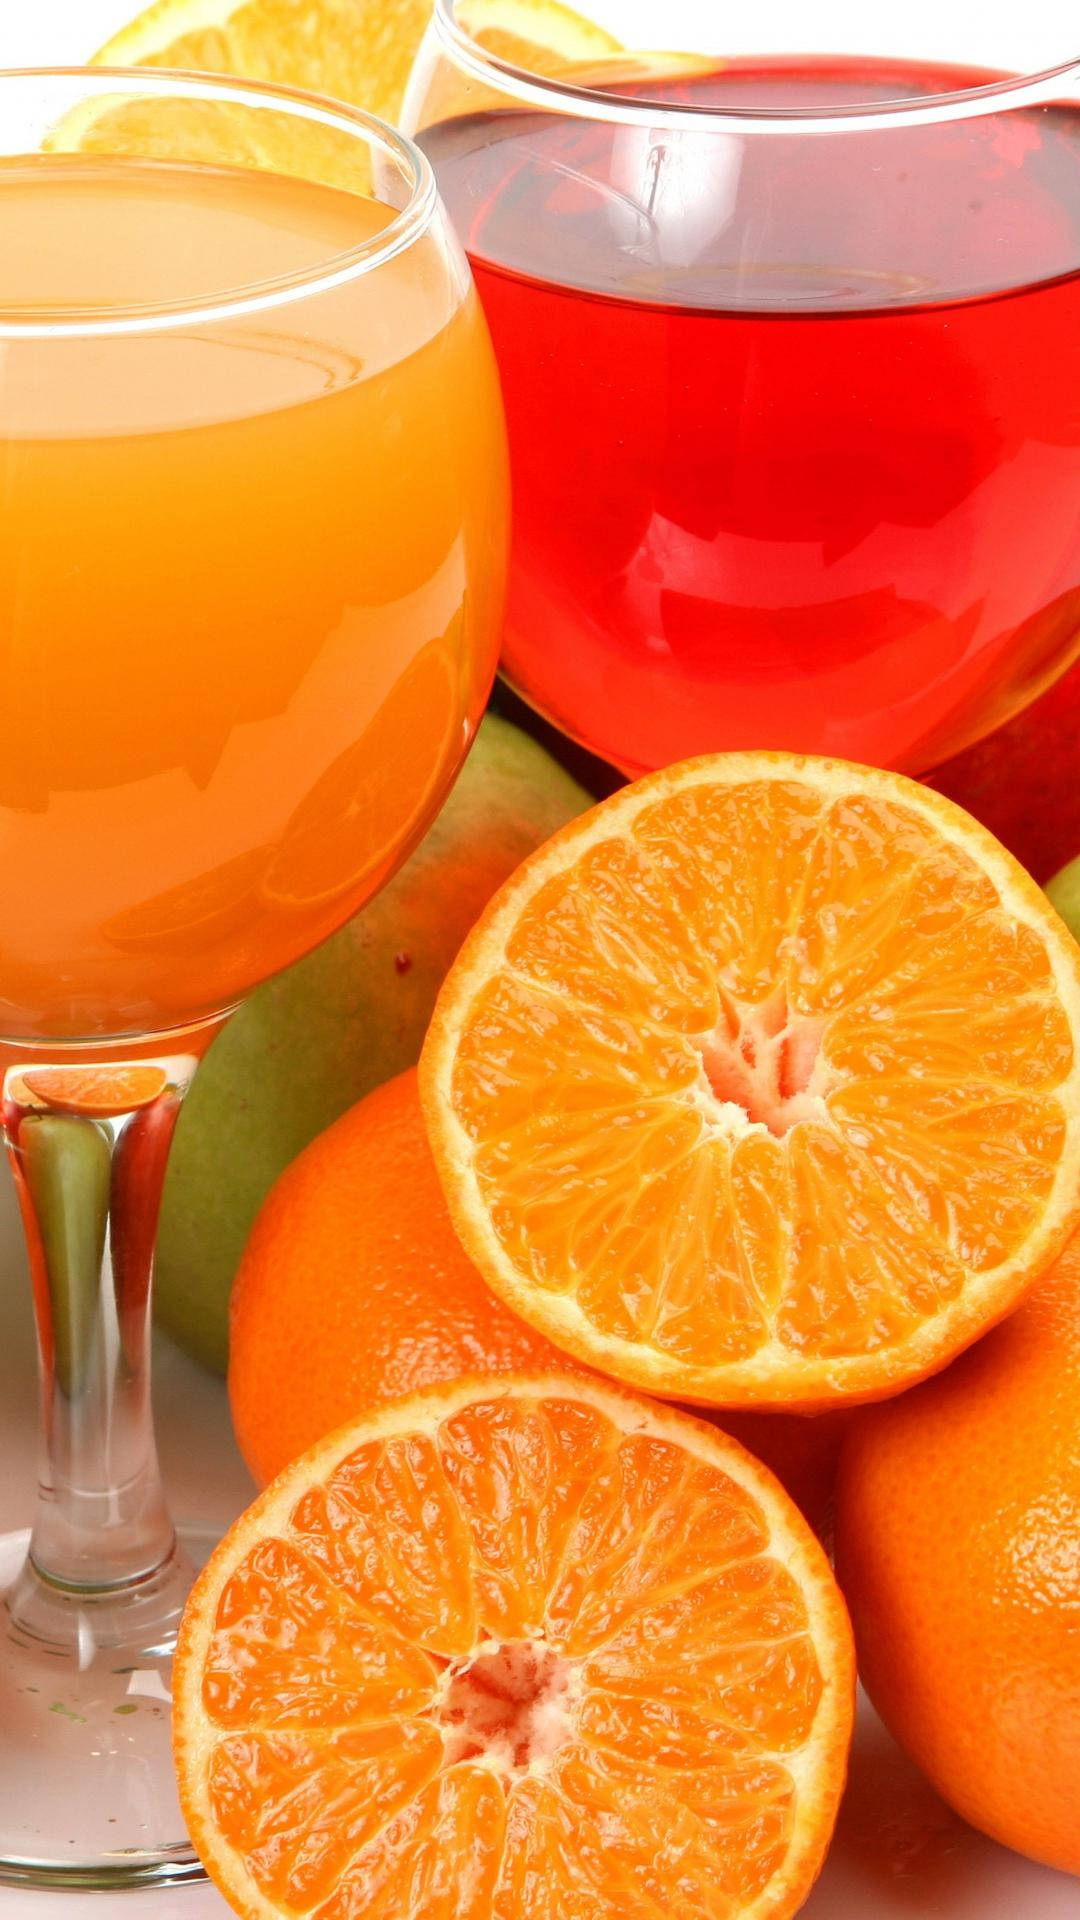 Vibrant Grapefruit Slices and Fresh Juice Wallpaper